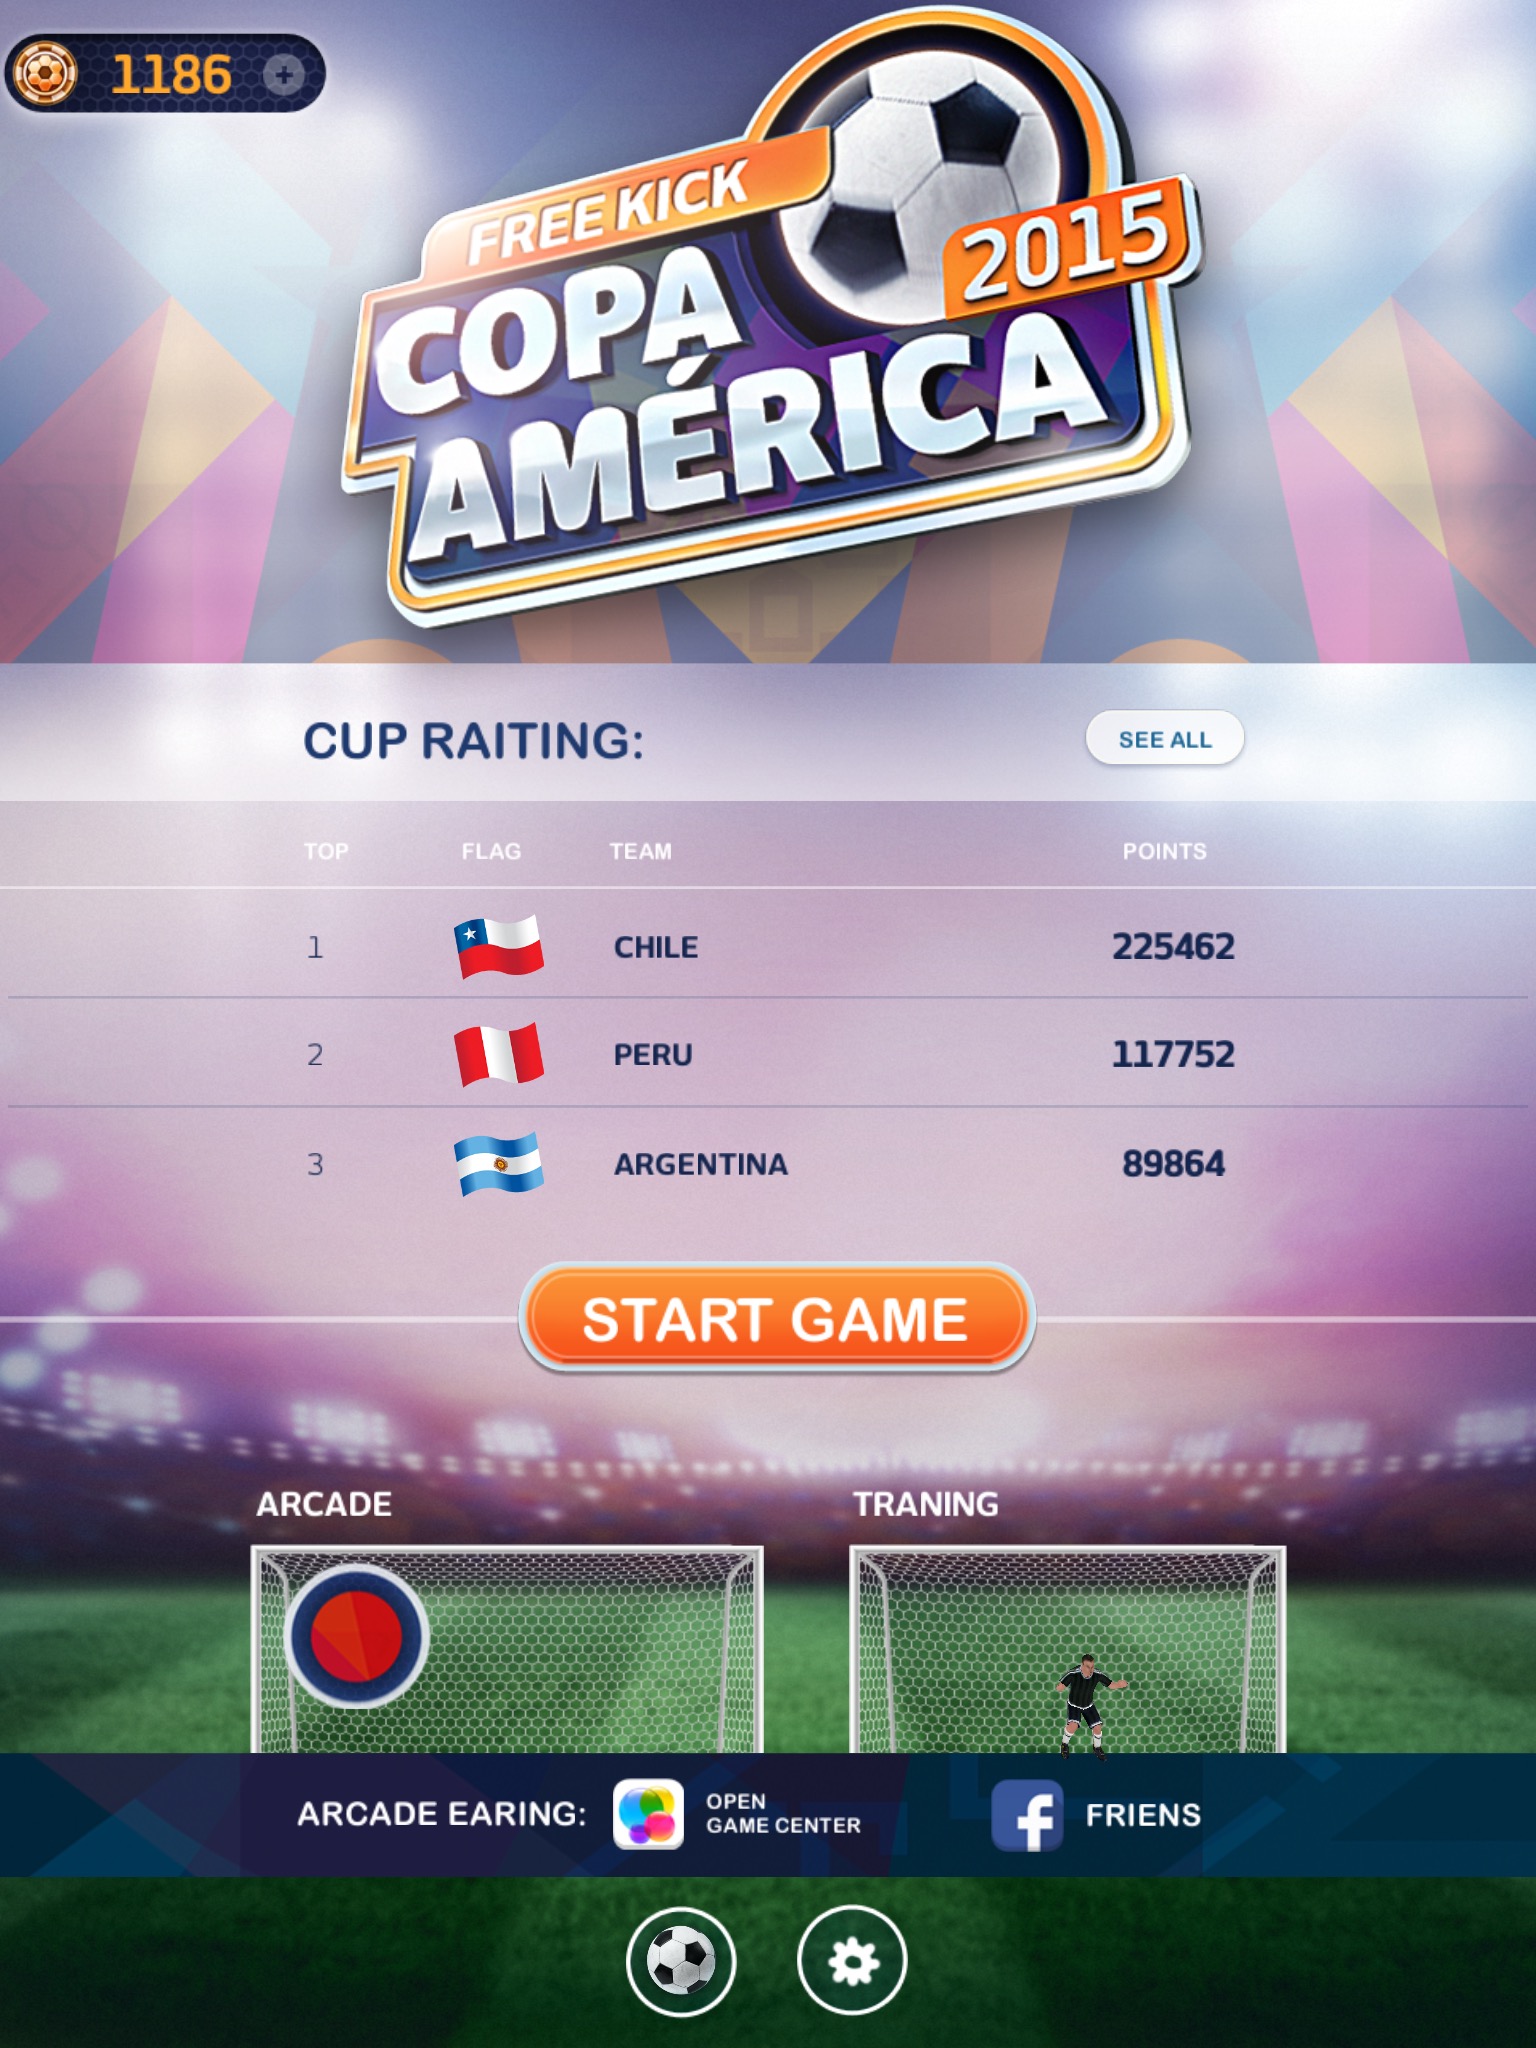 Copa America 2015 – Free Kick